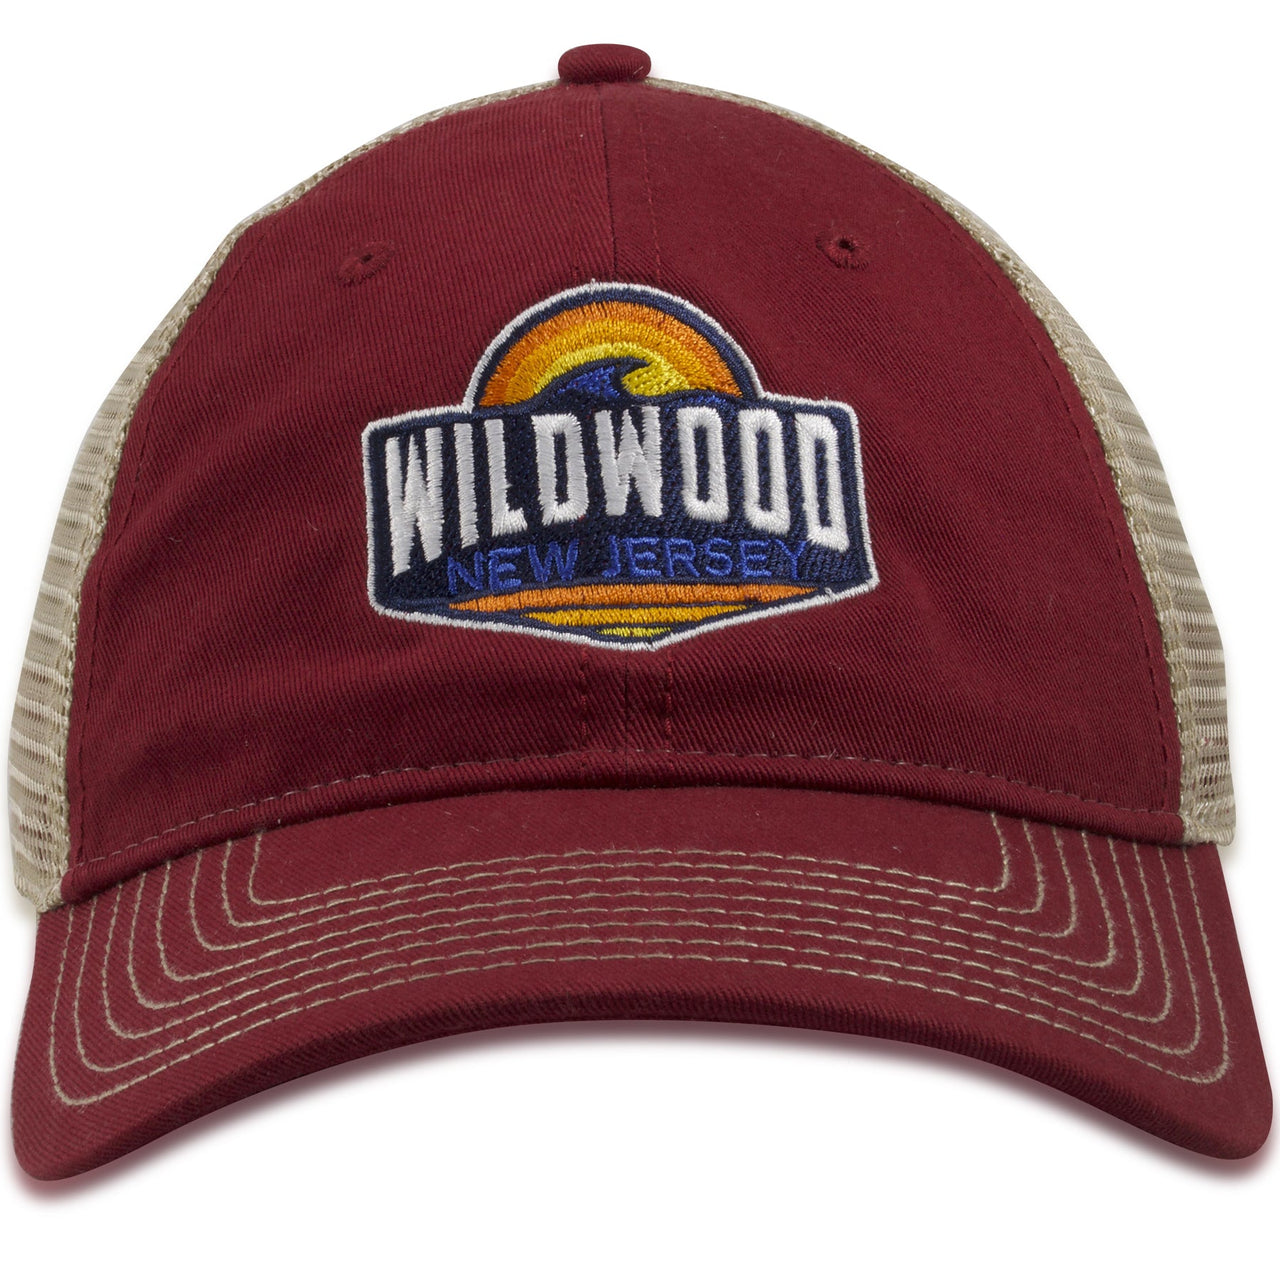 Wildwood New Jersey Sunset Wave Cardinal / Khaki Mesh-Back Trucker Hat